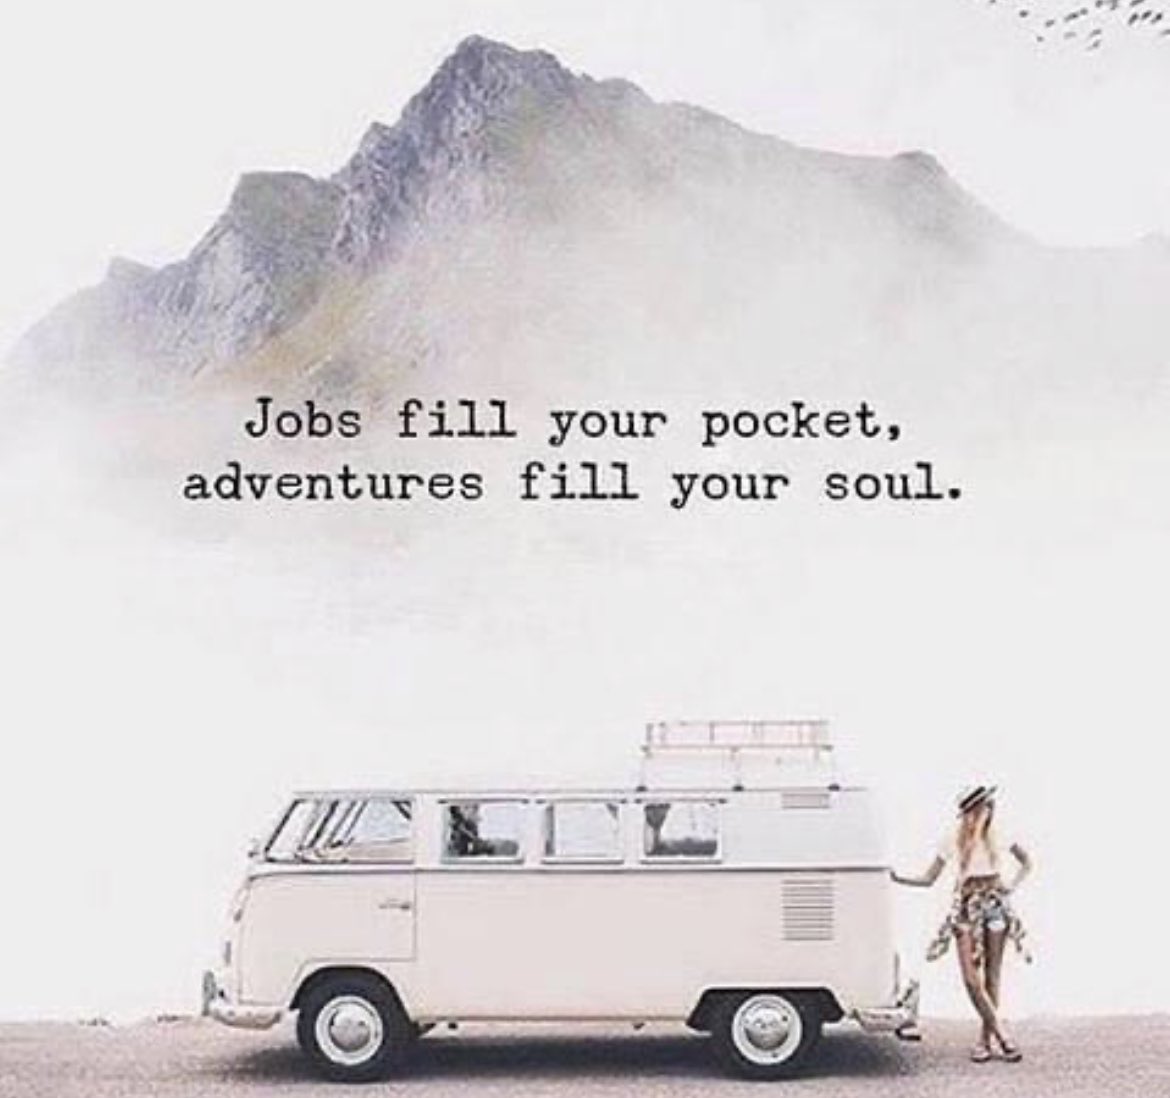 #PostForPencils 
What adventure will you take?